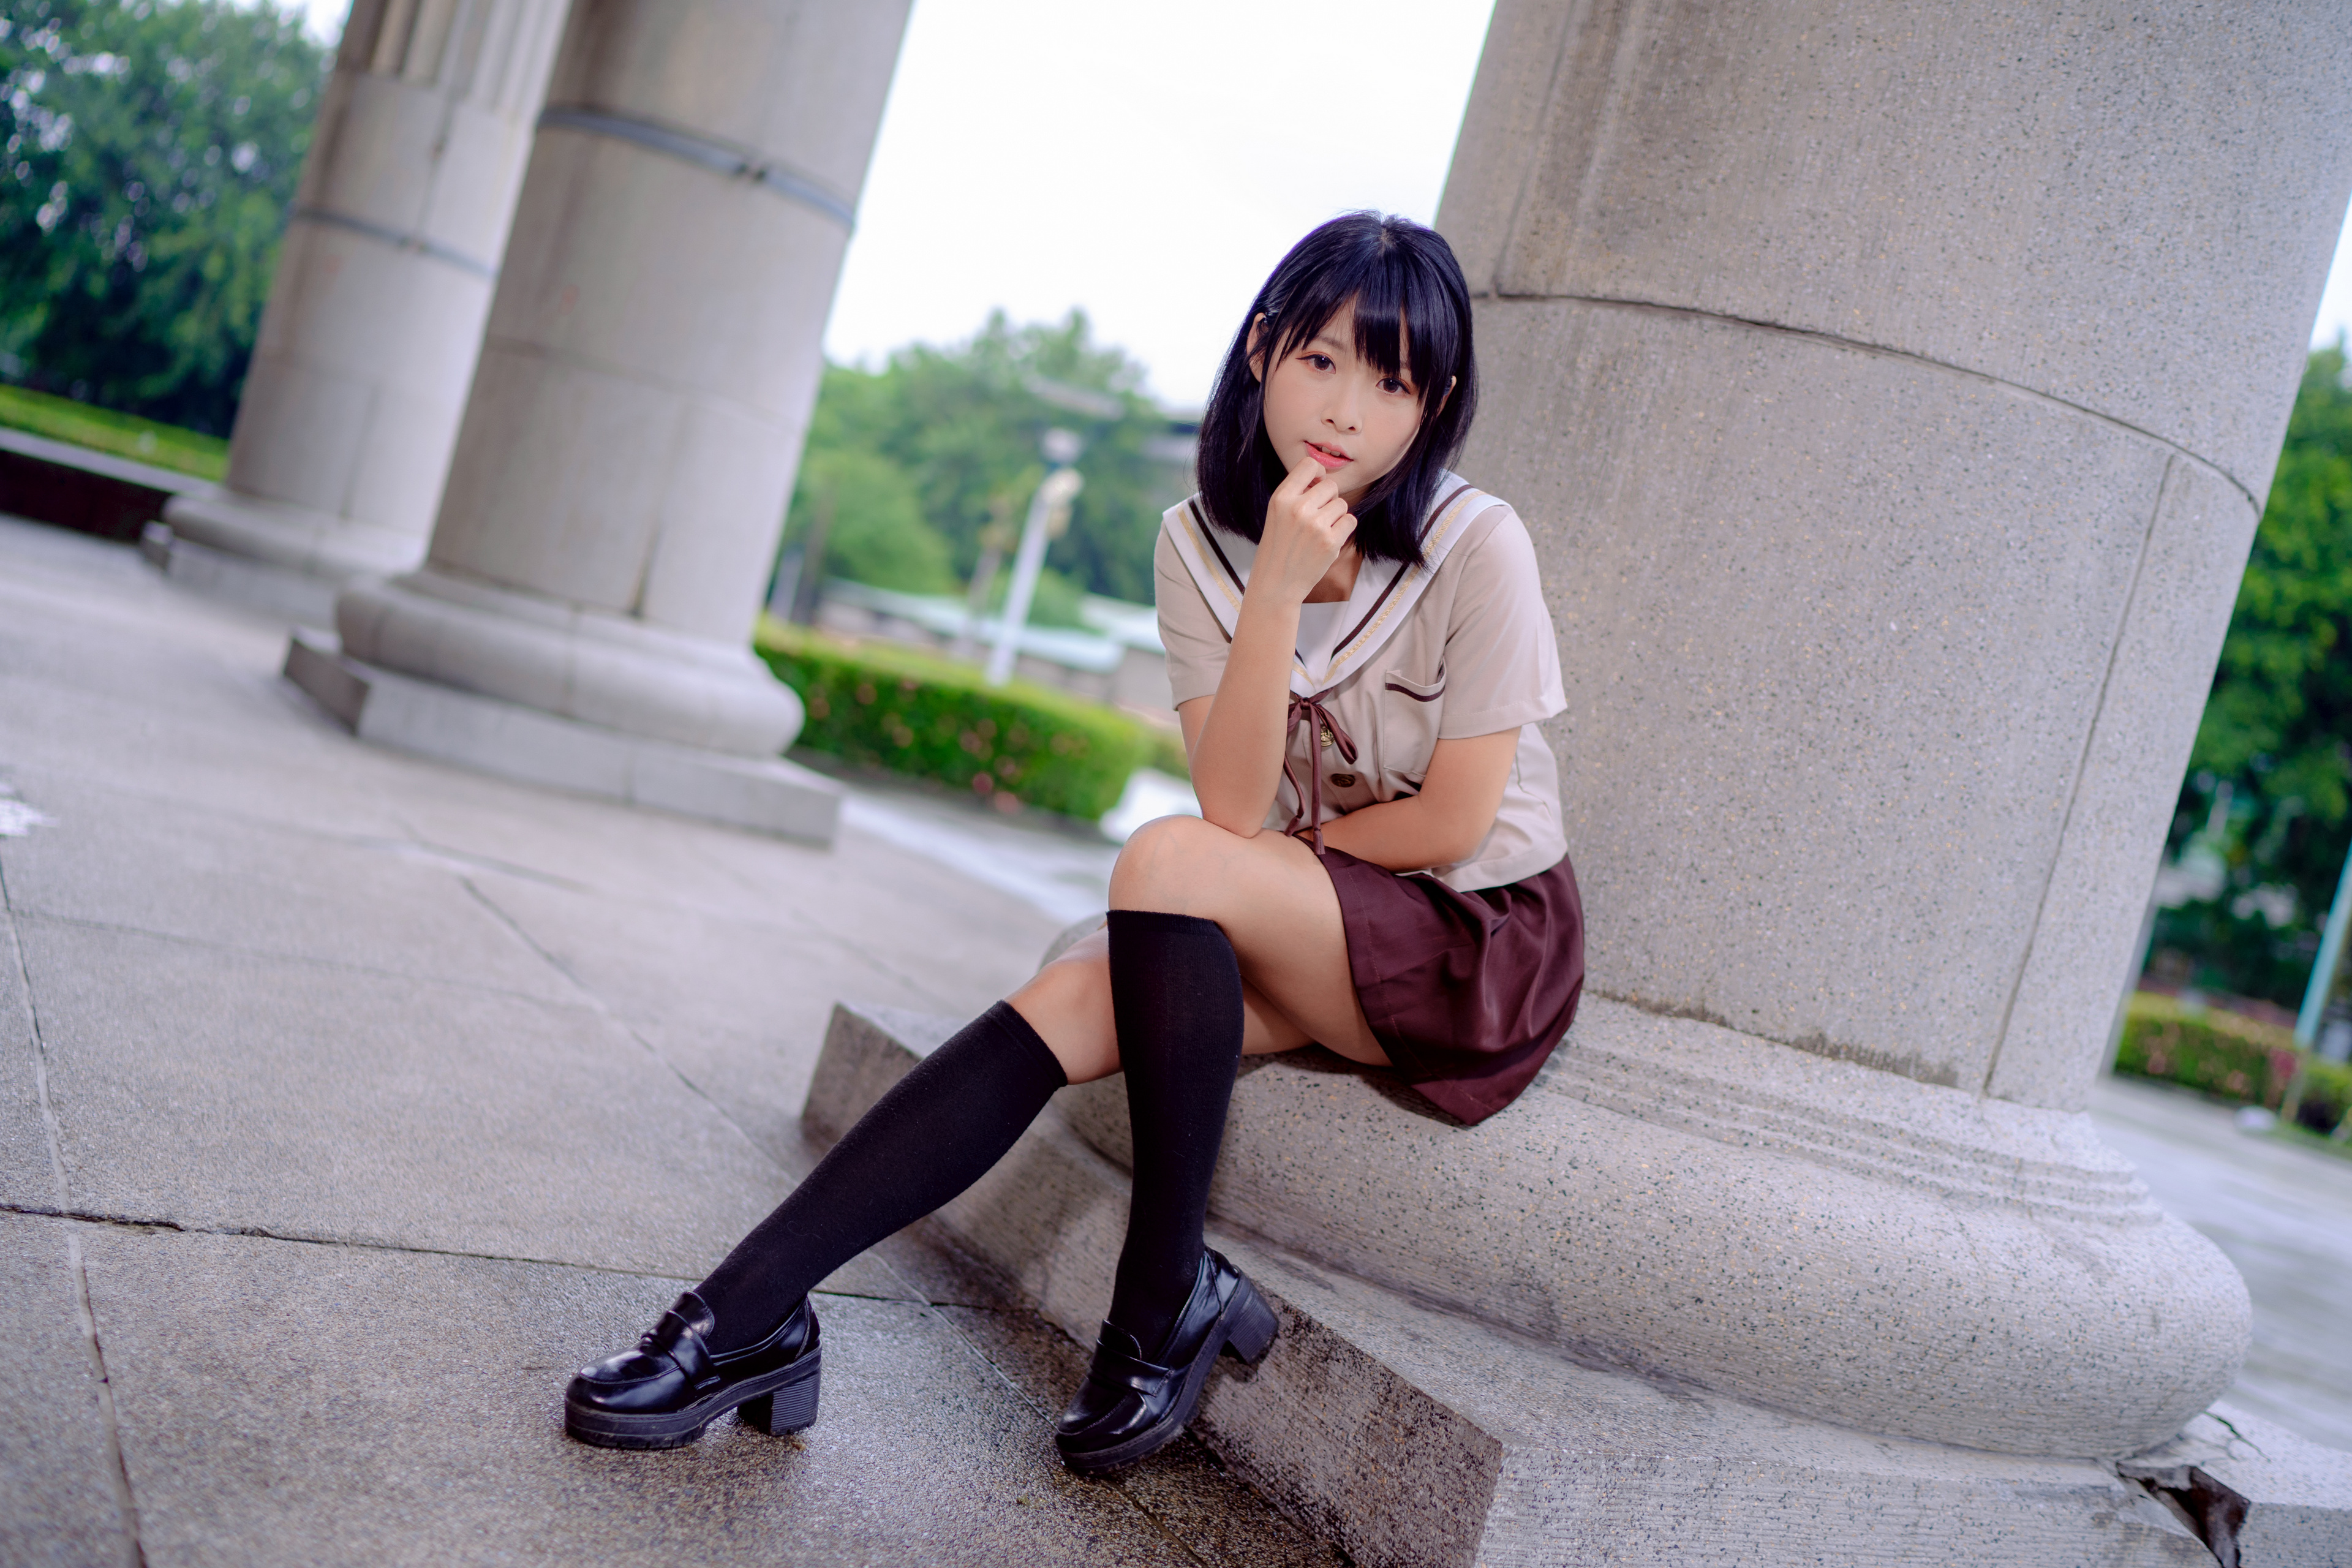 Asian Model Women Long Hair Dark Hair Knee High Socks Sitting School Uniform 3840x2560